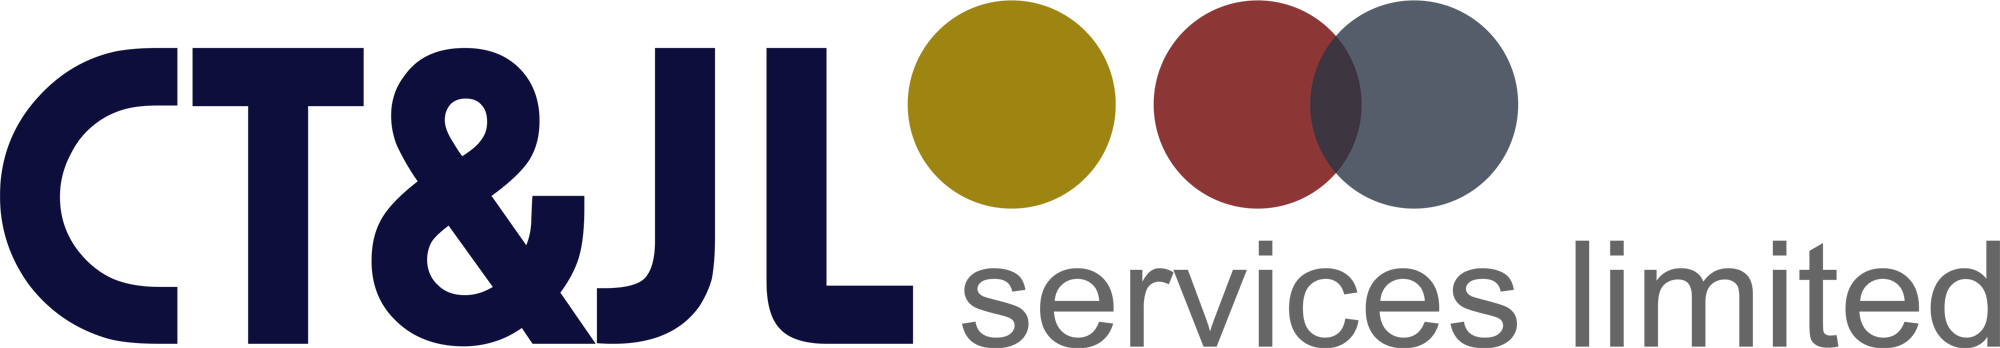 ct&jl services logo